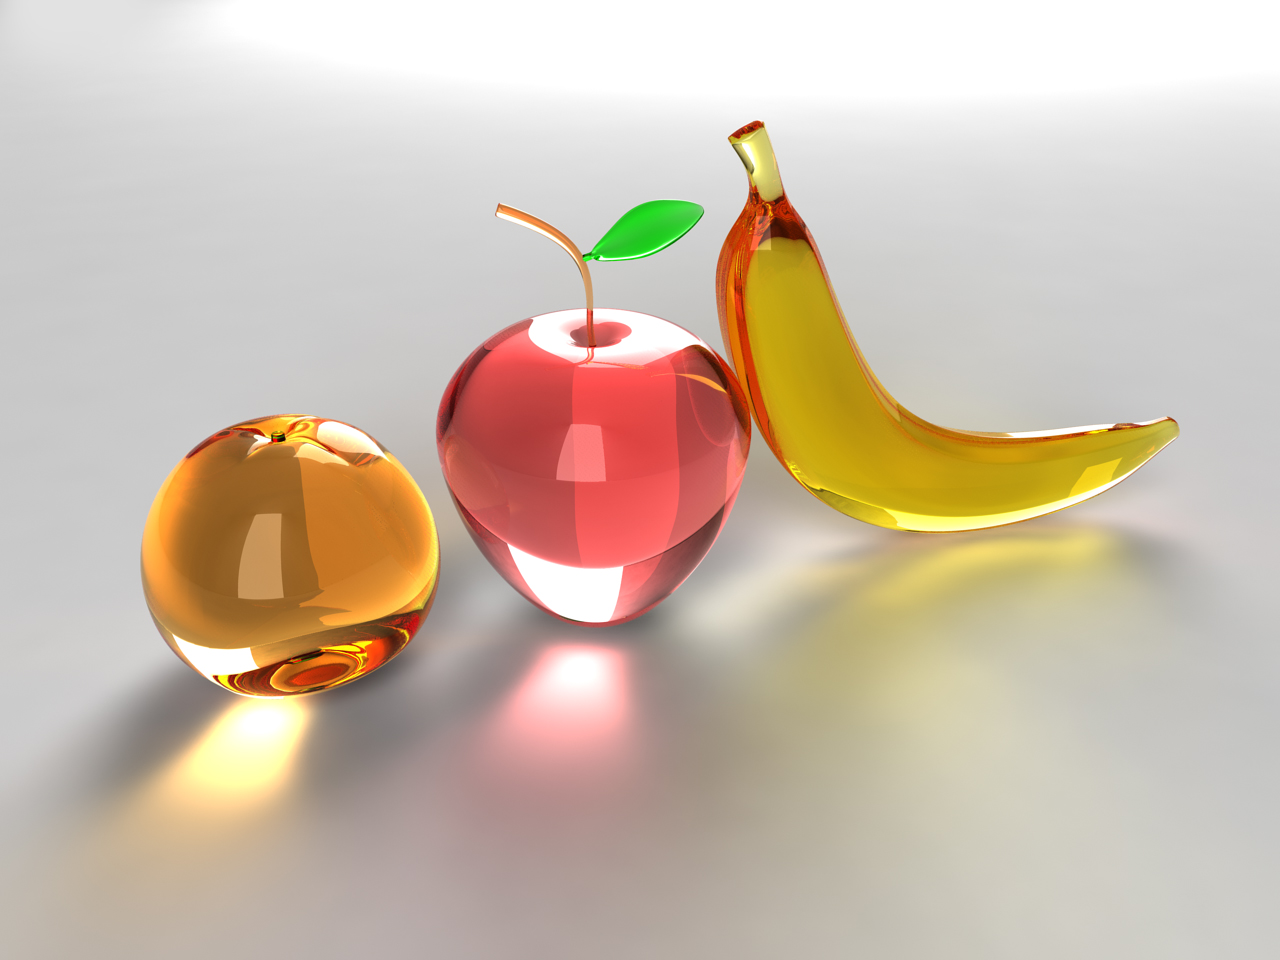 1514578 descargar imagen fruta, vidrio, naranja), alimento, manzana, banana: fondos de pantalla y protectores de pantalla gratis